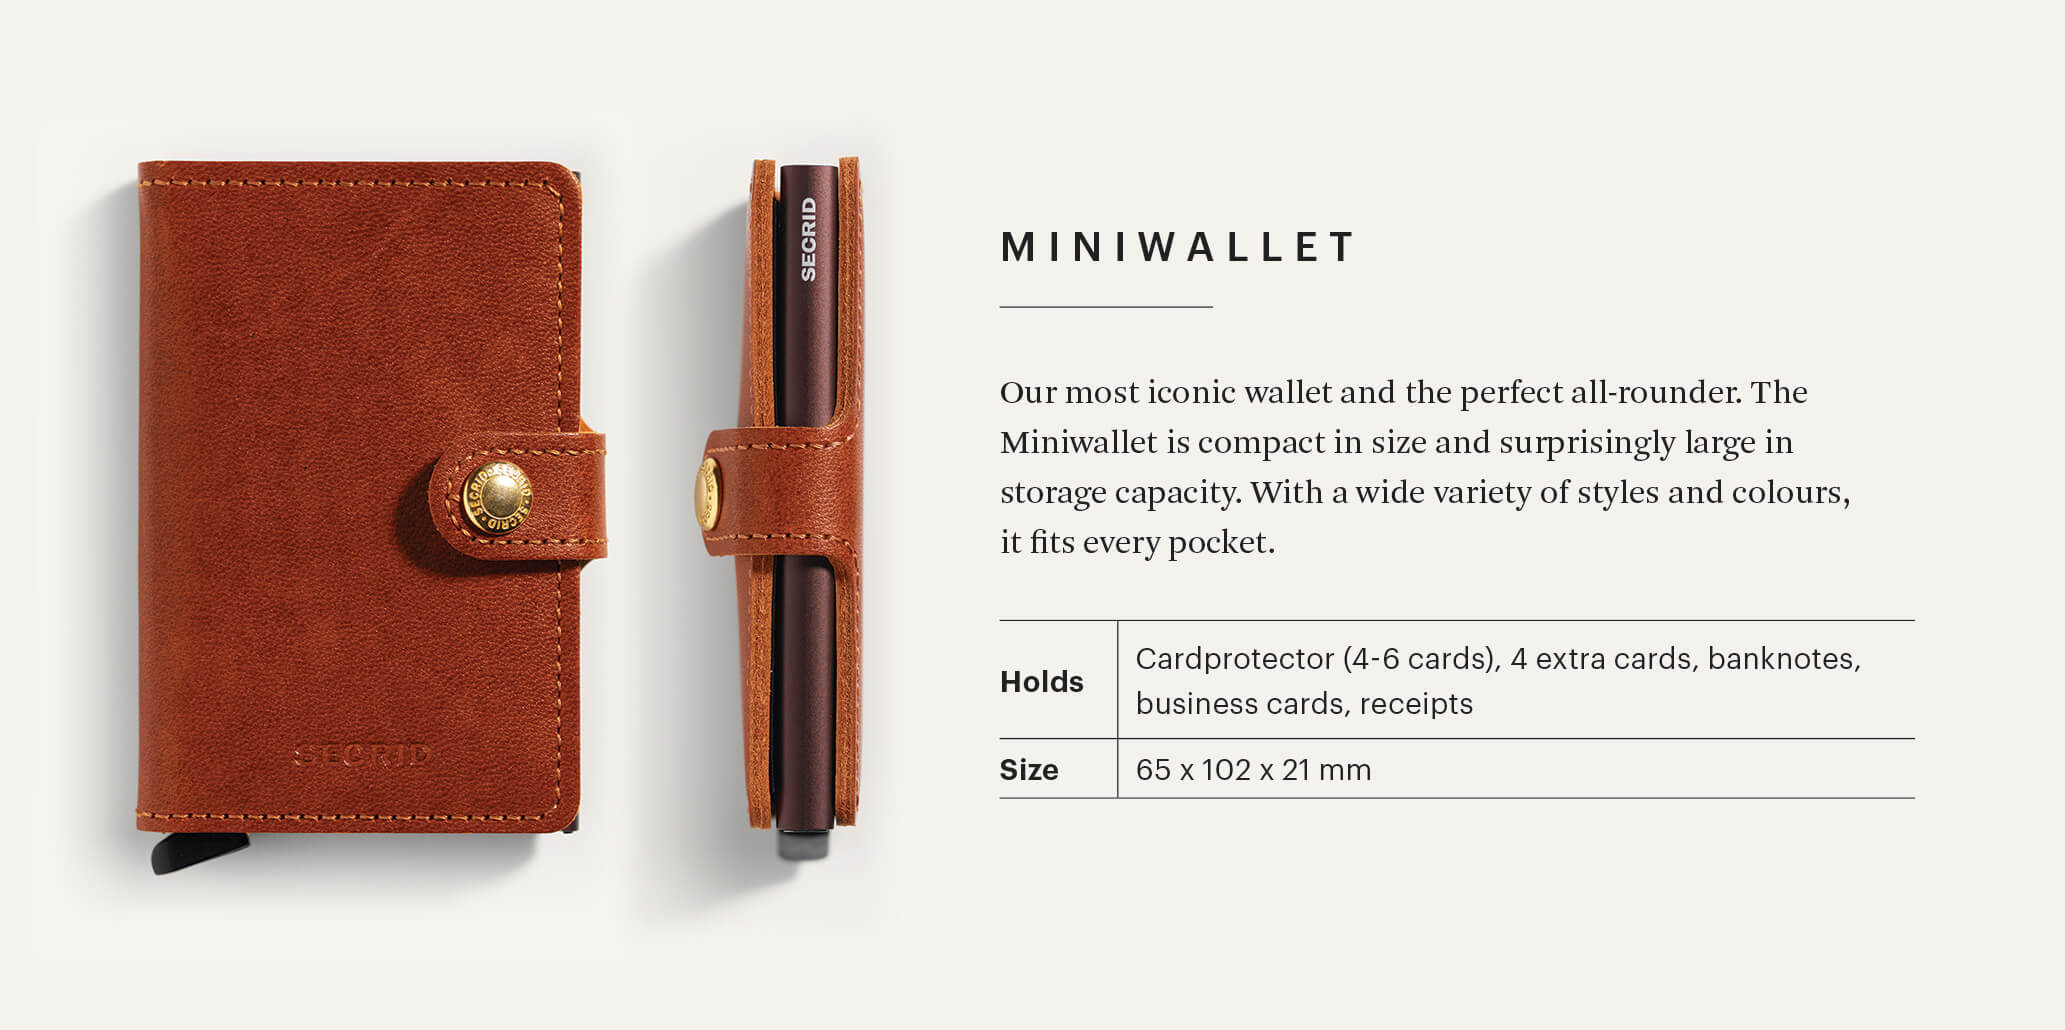 Miniwallet | Stitched Magnolia Black Leather | by Secrid Wallets - Lifestory - Secrid Wallets